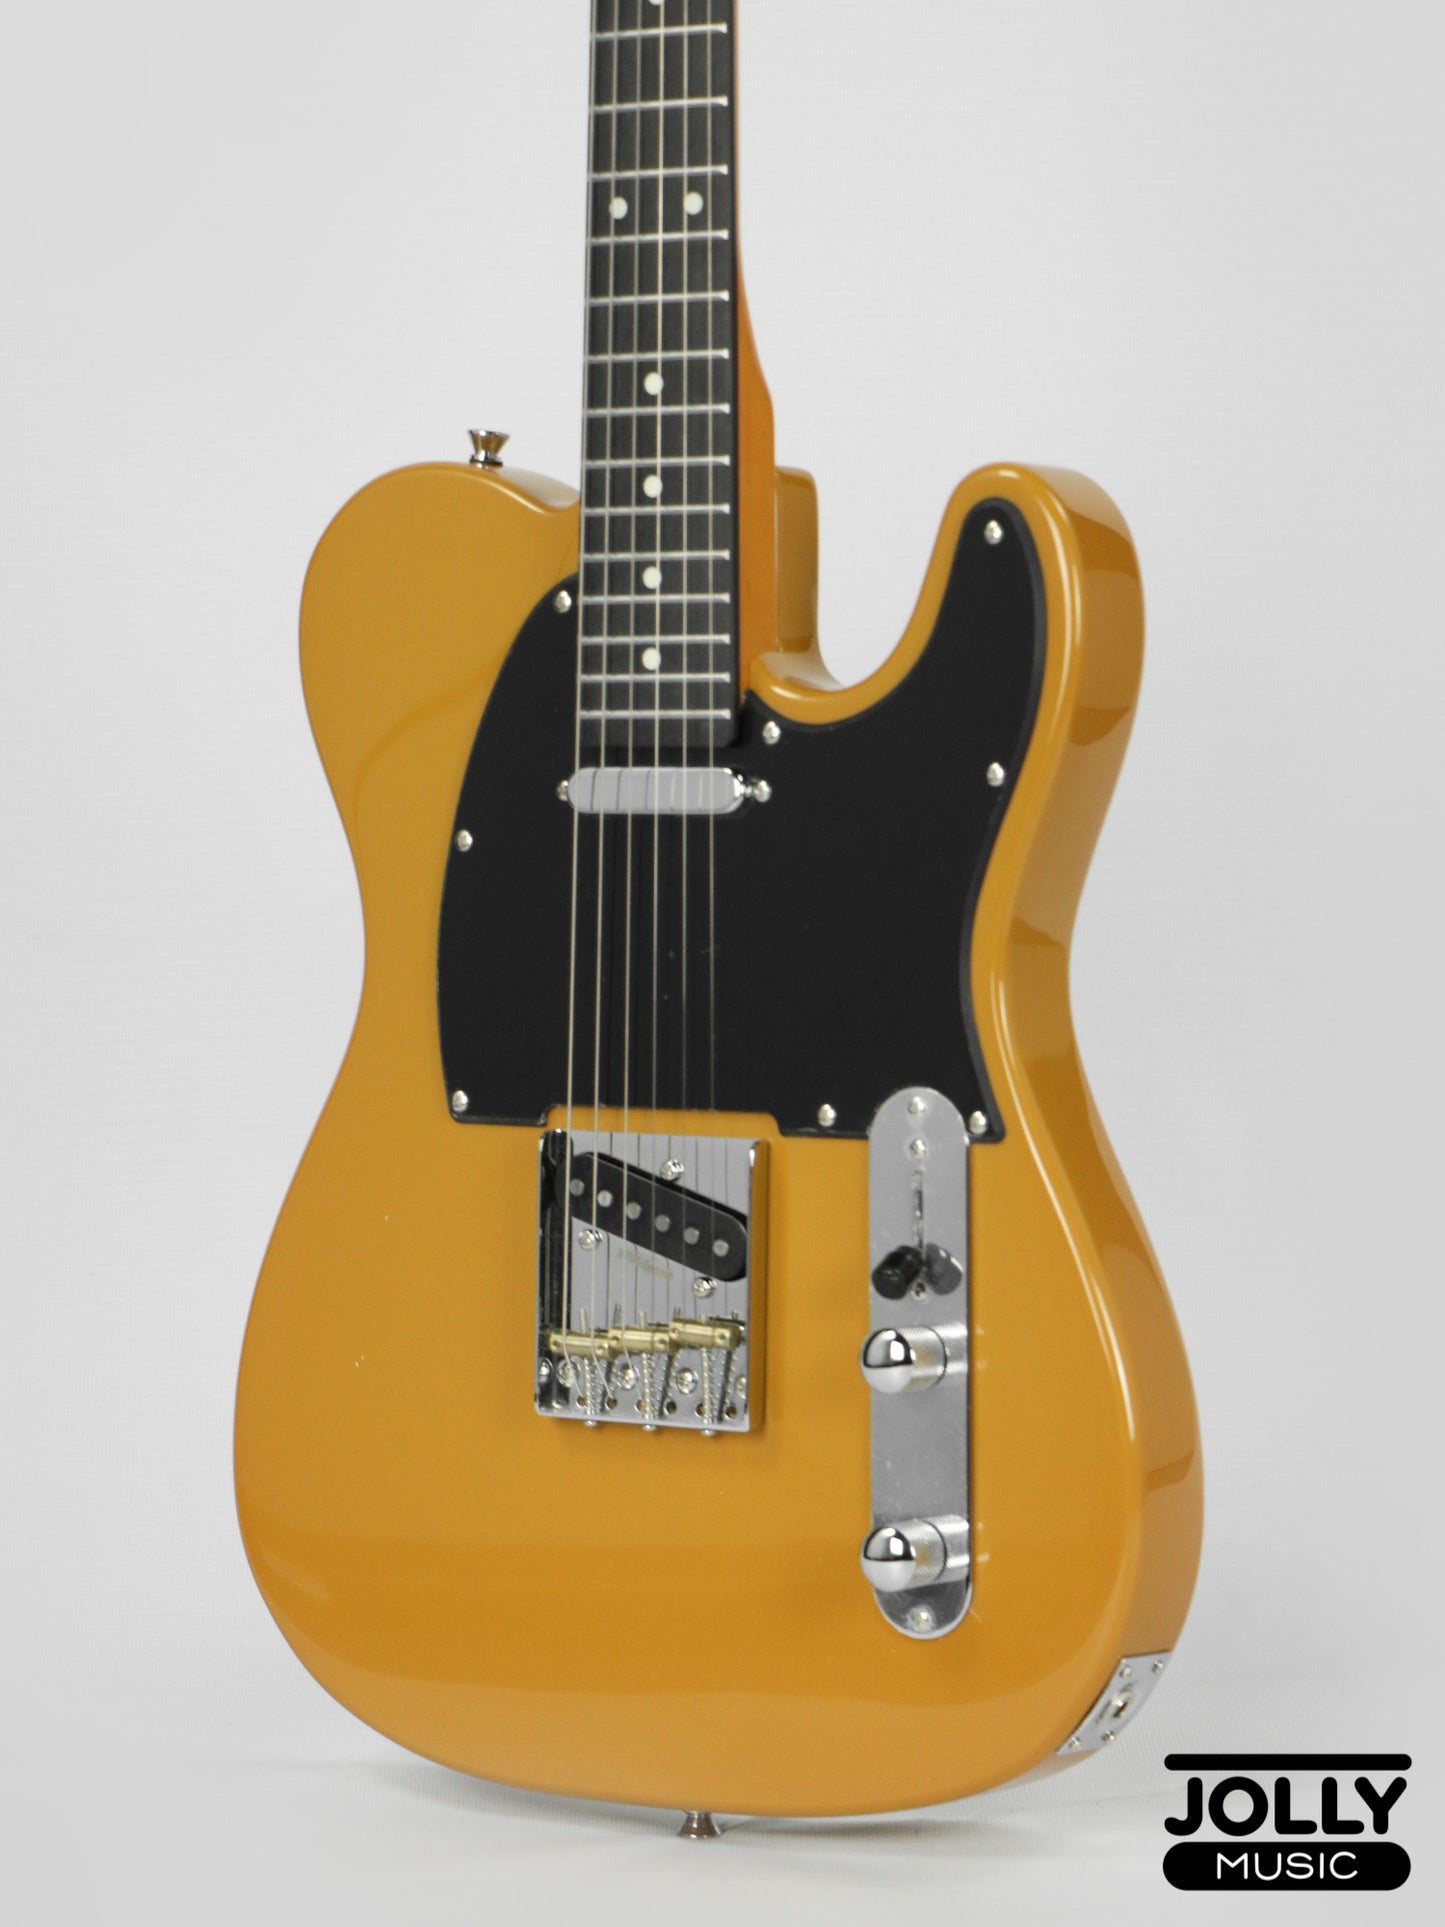 JCraft Vintage Series T-3V T-Style Electric Guitar - Butterscotch